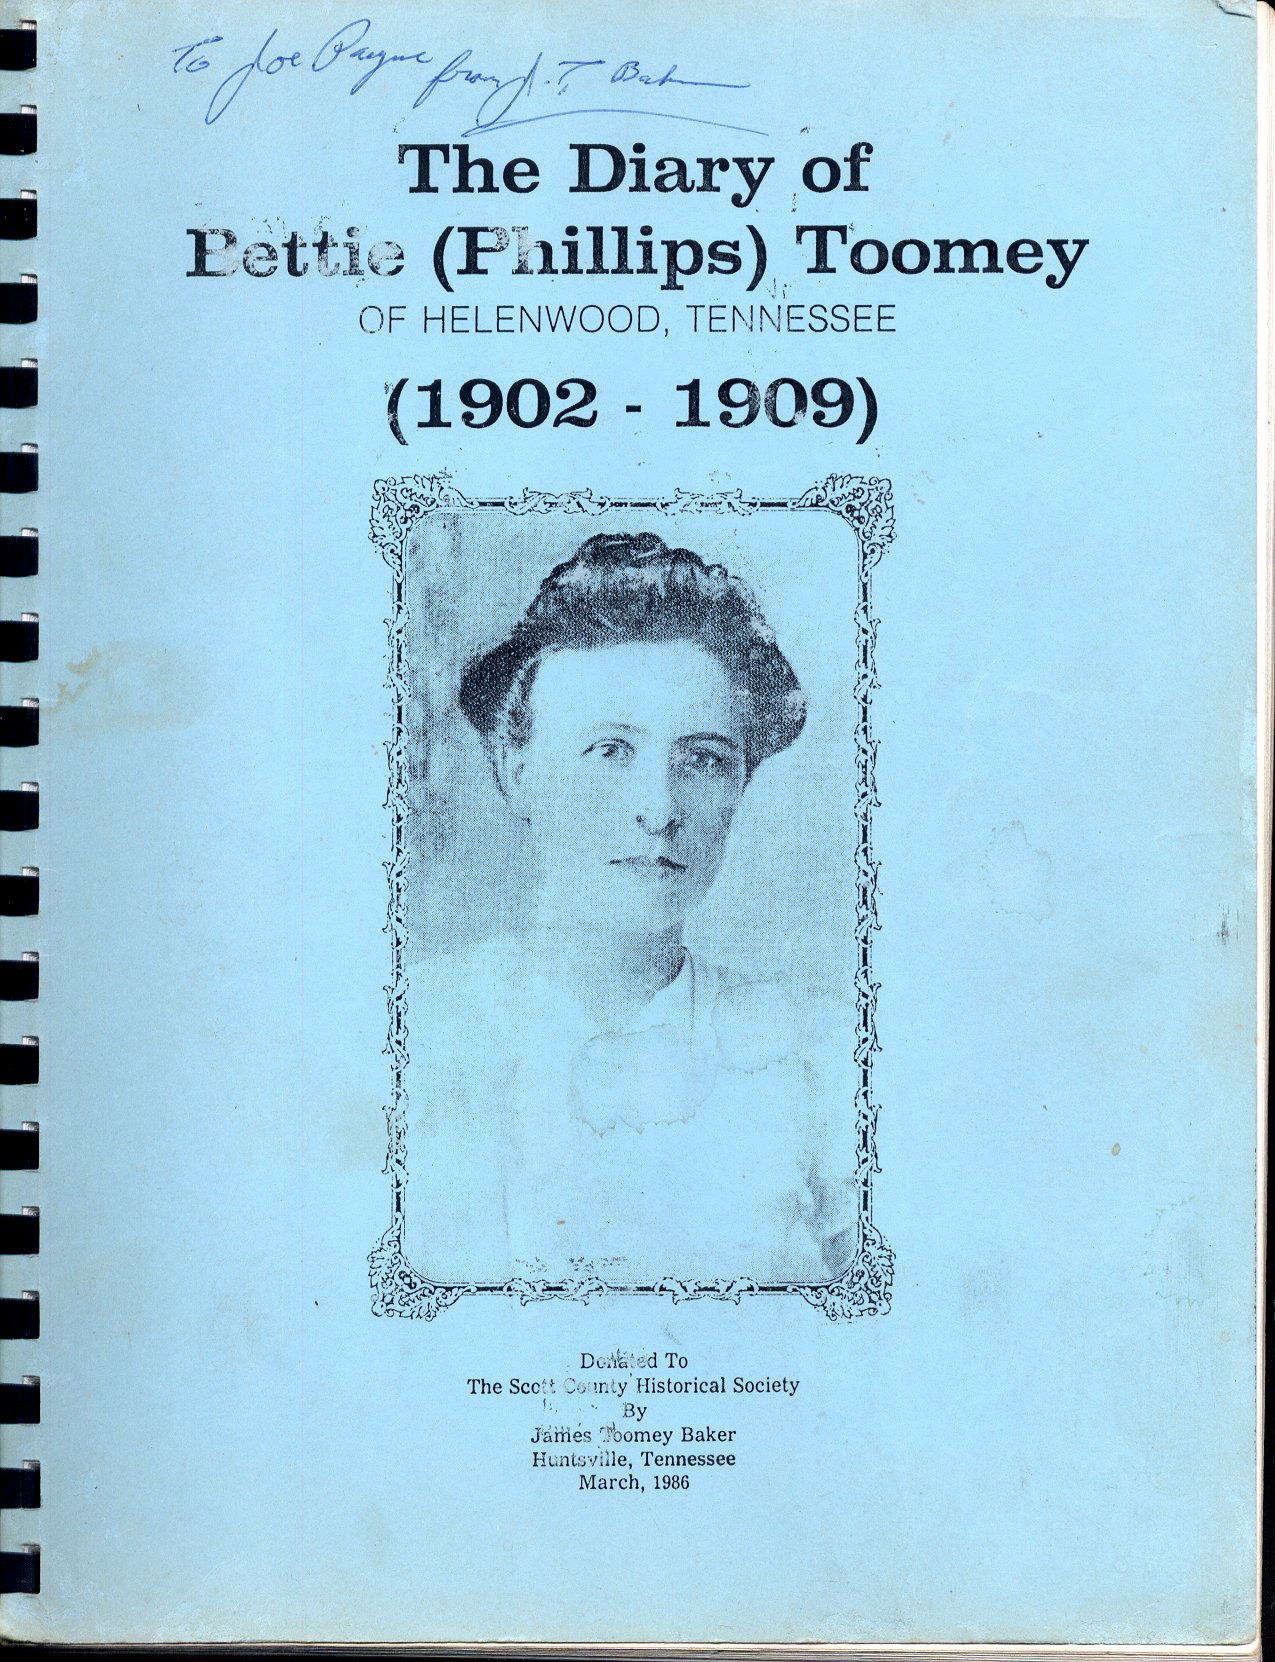 The Diary of Bettie Phillips Toomey